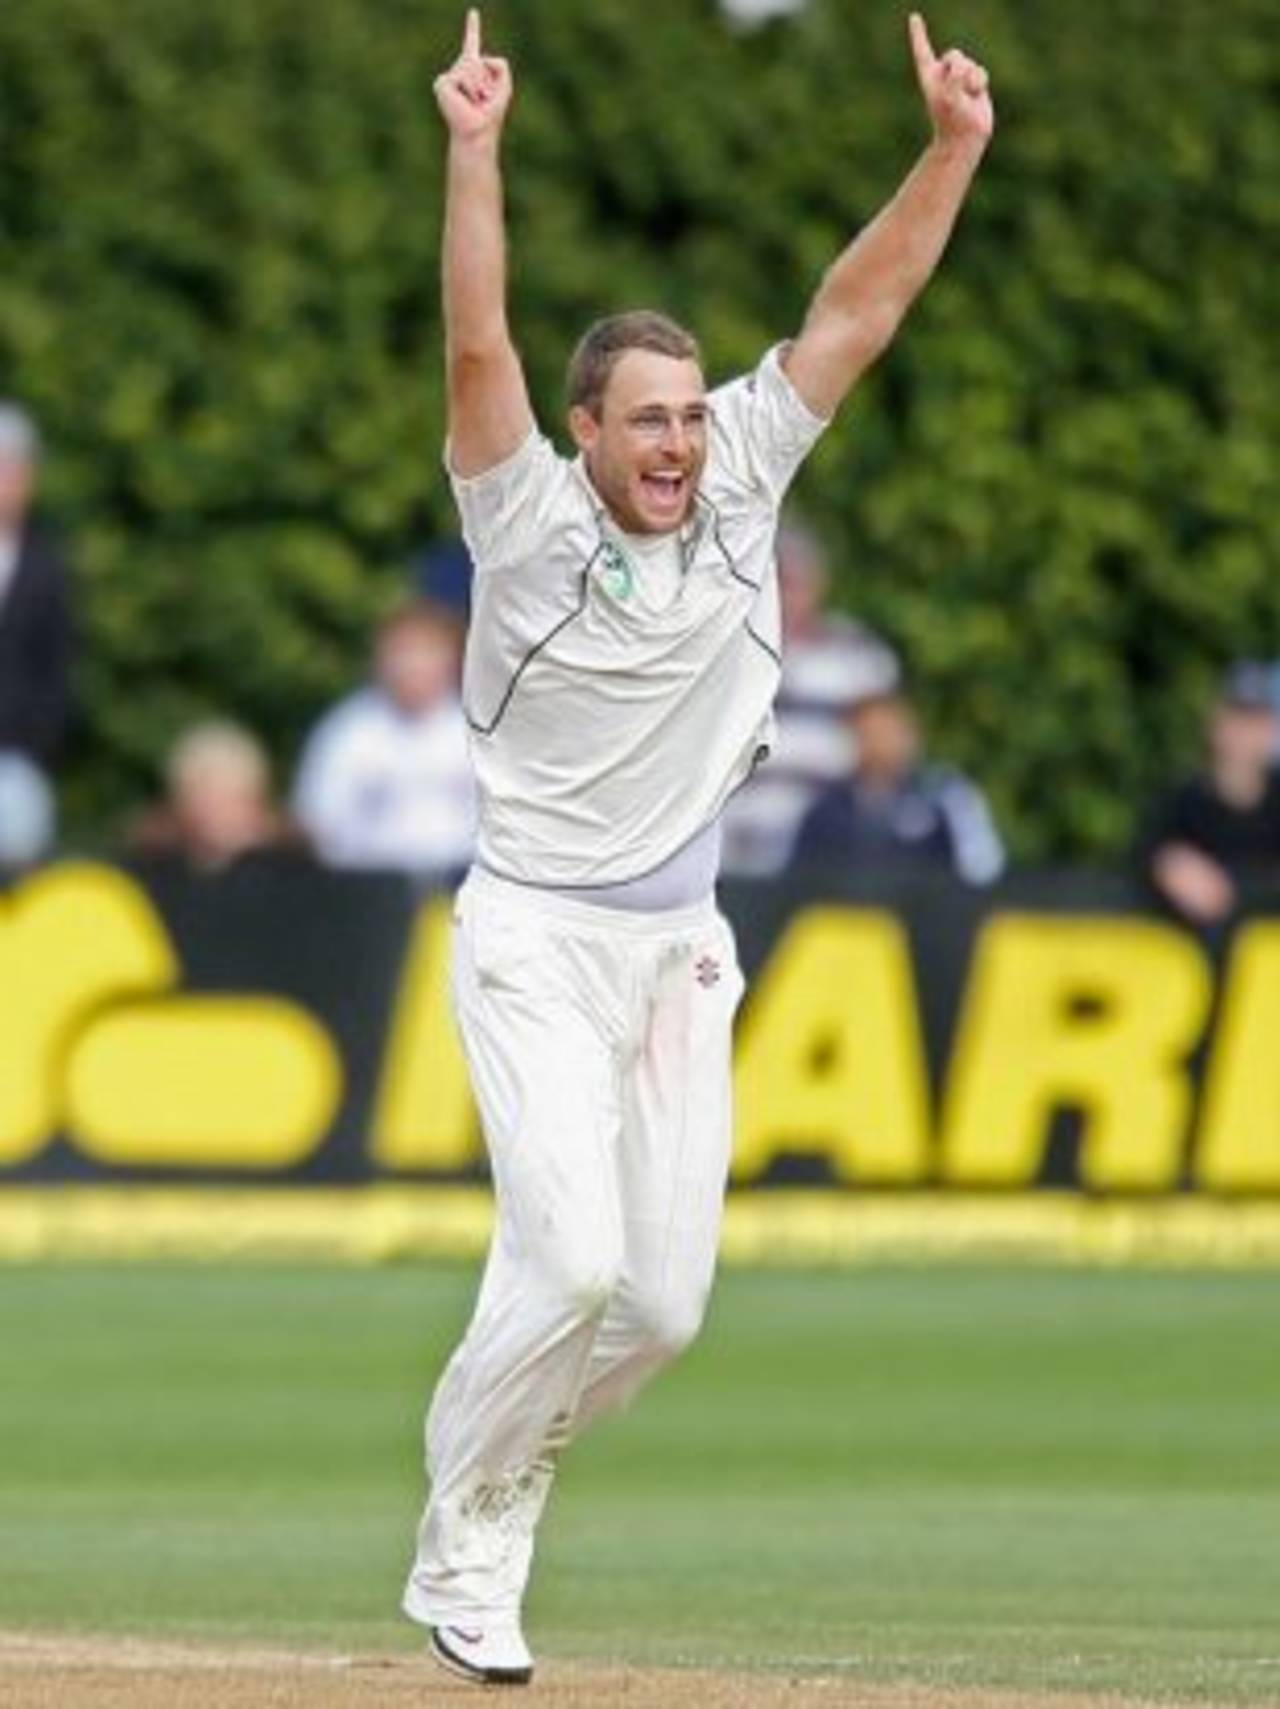 Daniel Vettori dismissed Rahul Dravid, New Zealand v India, 3rd Test, Wellington, 3rd day, April 5, 2009